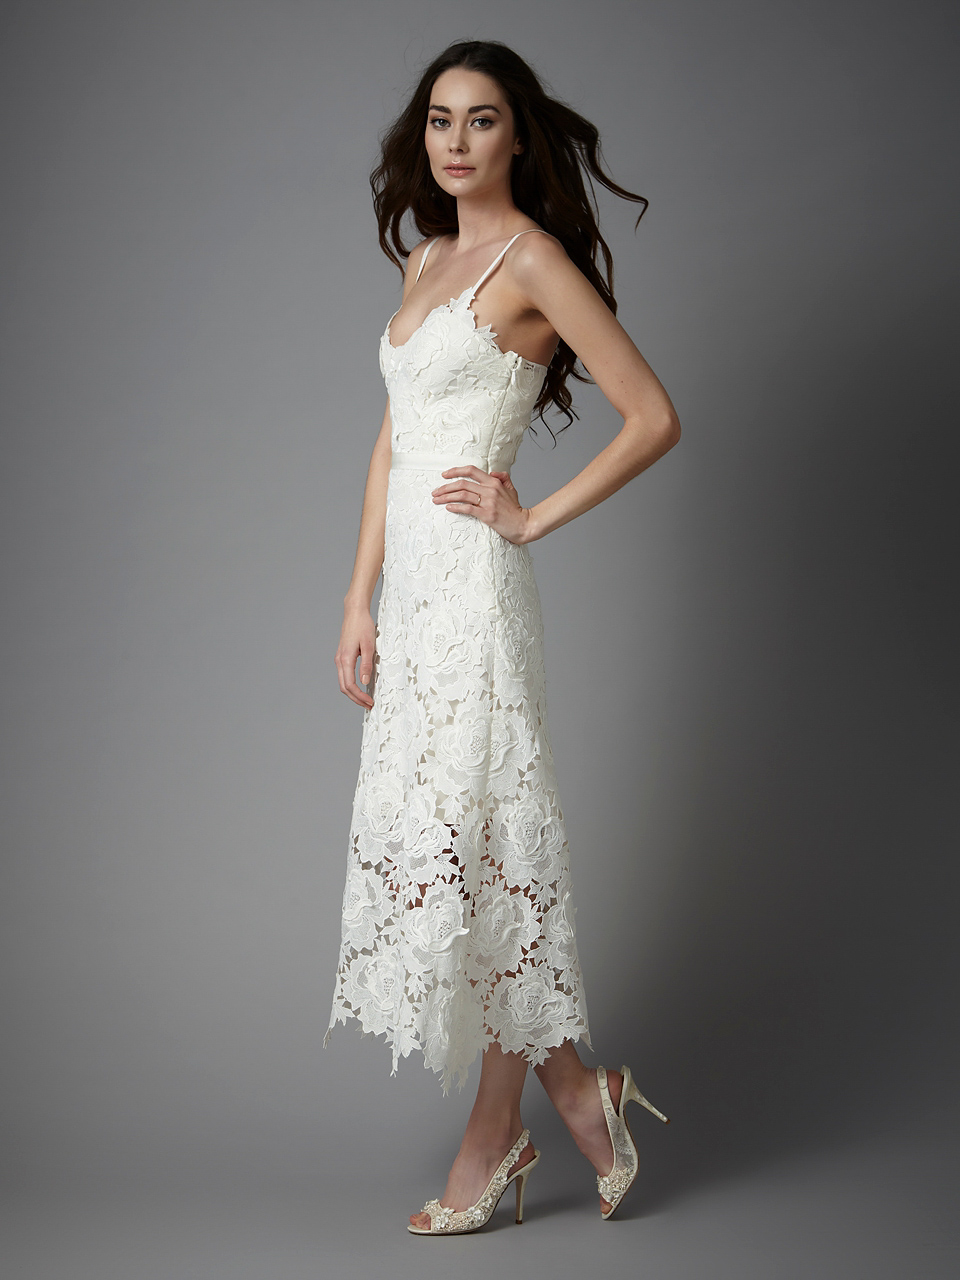 Catherine Deane - feminine and luxury wedding dresses.